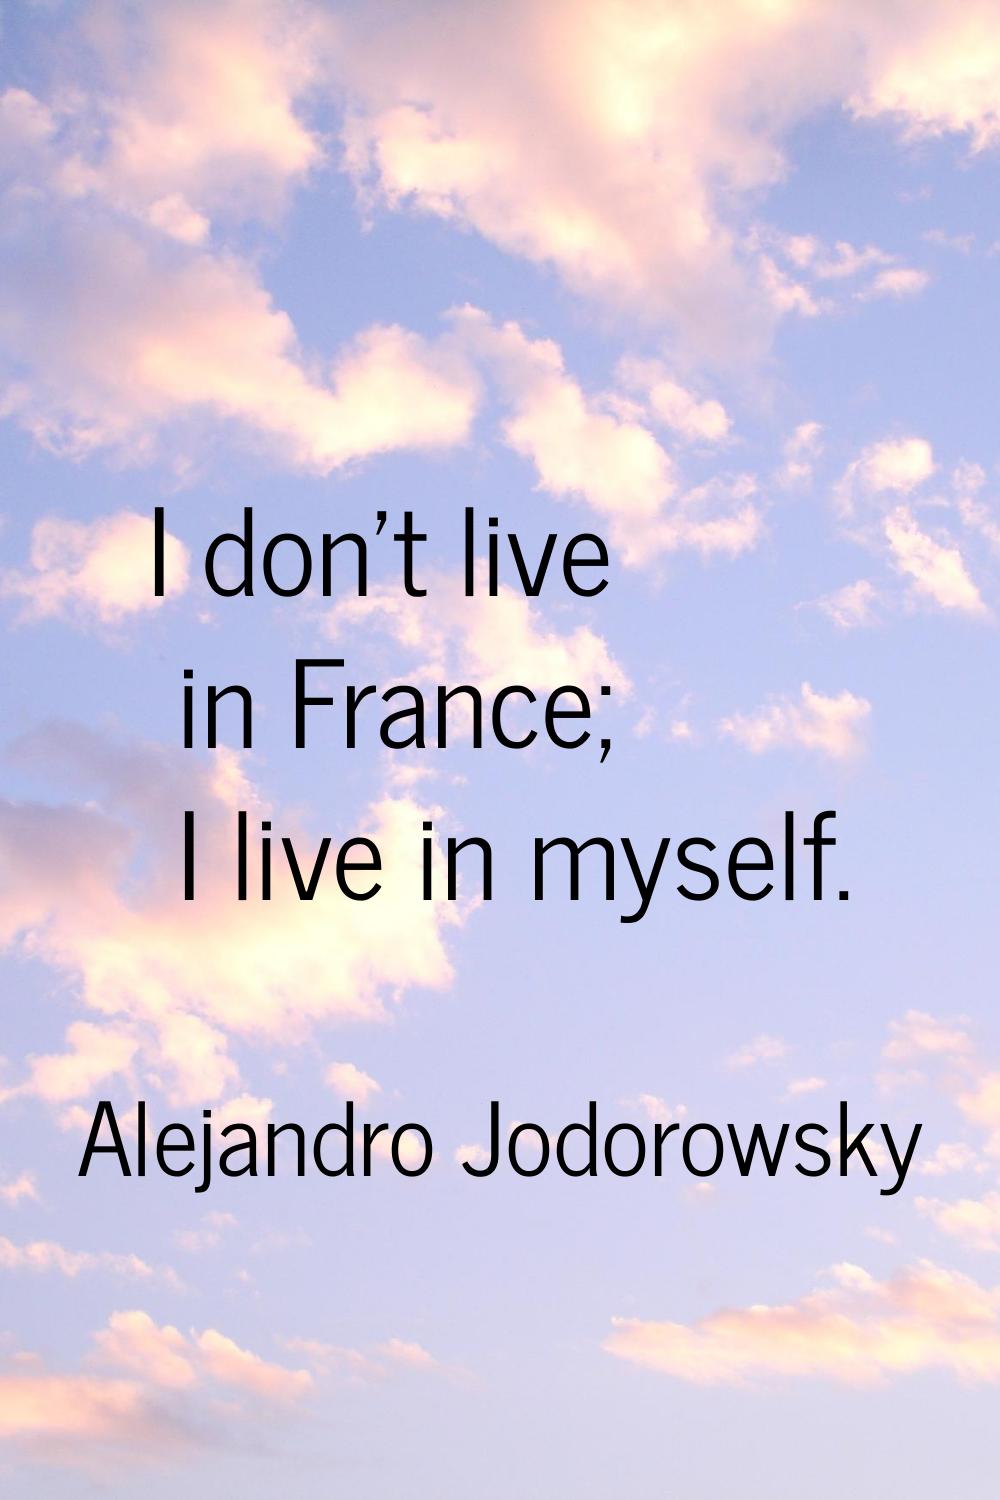 I don't live in France; I live in myself.